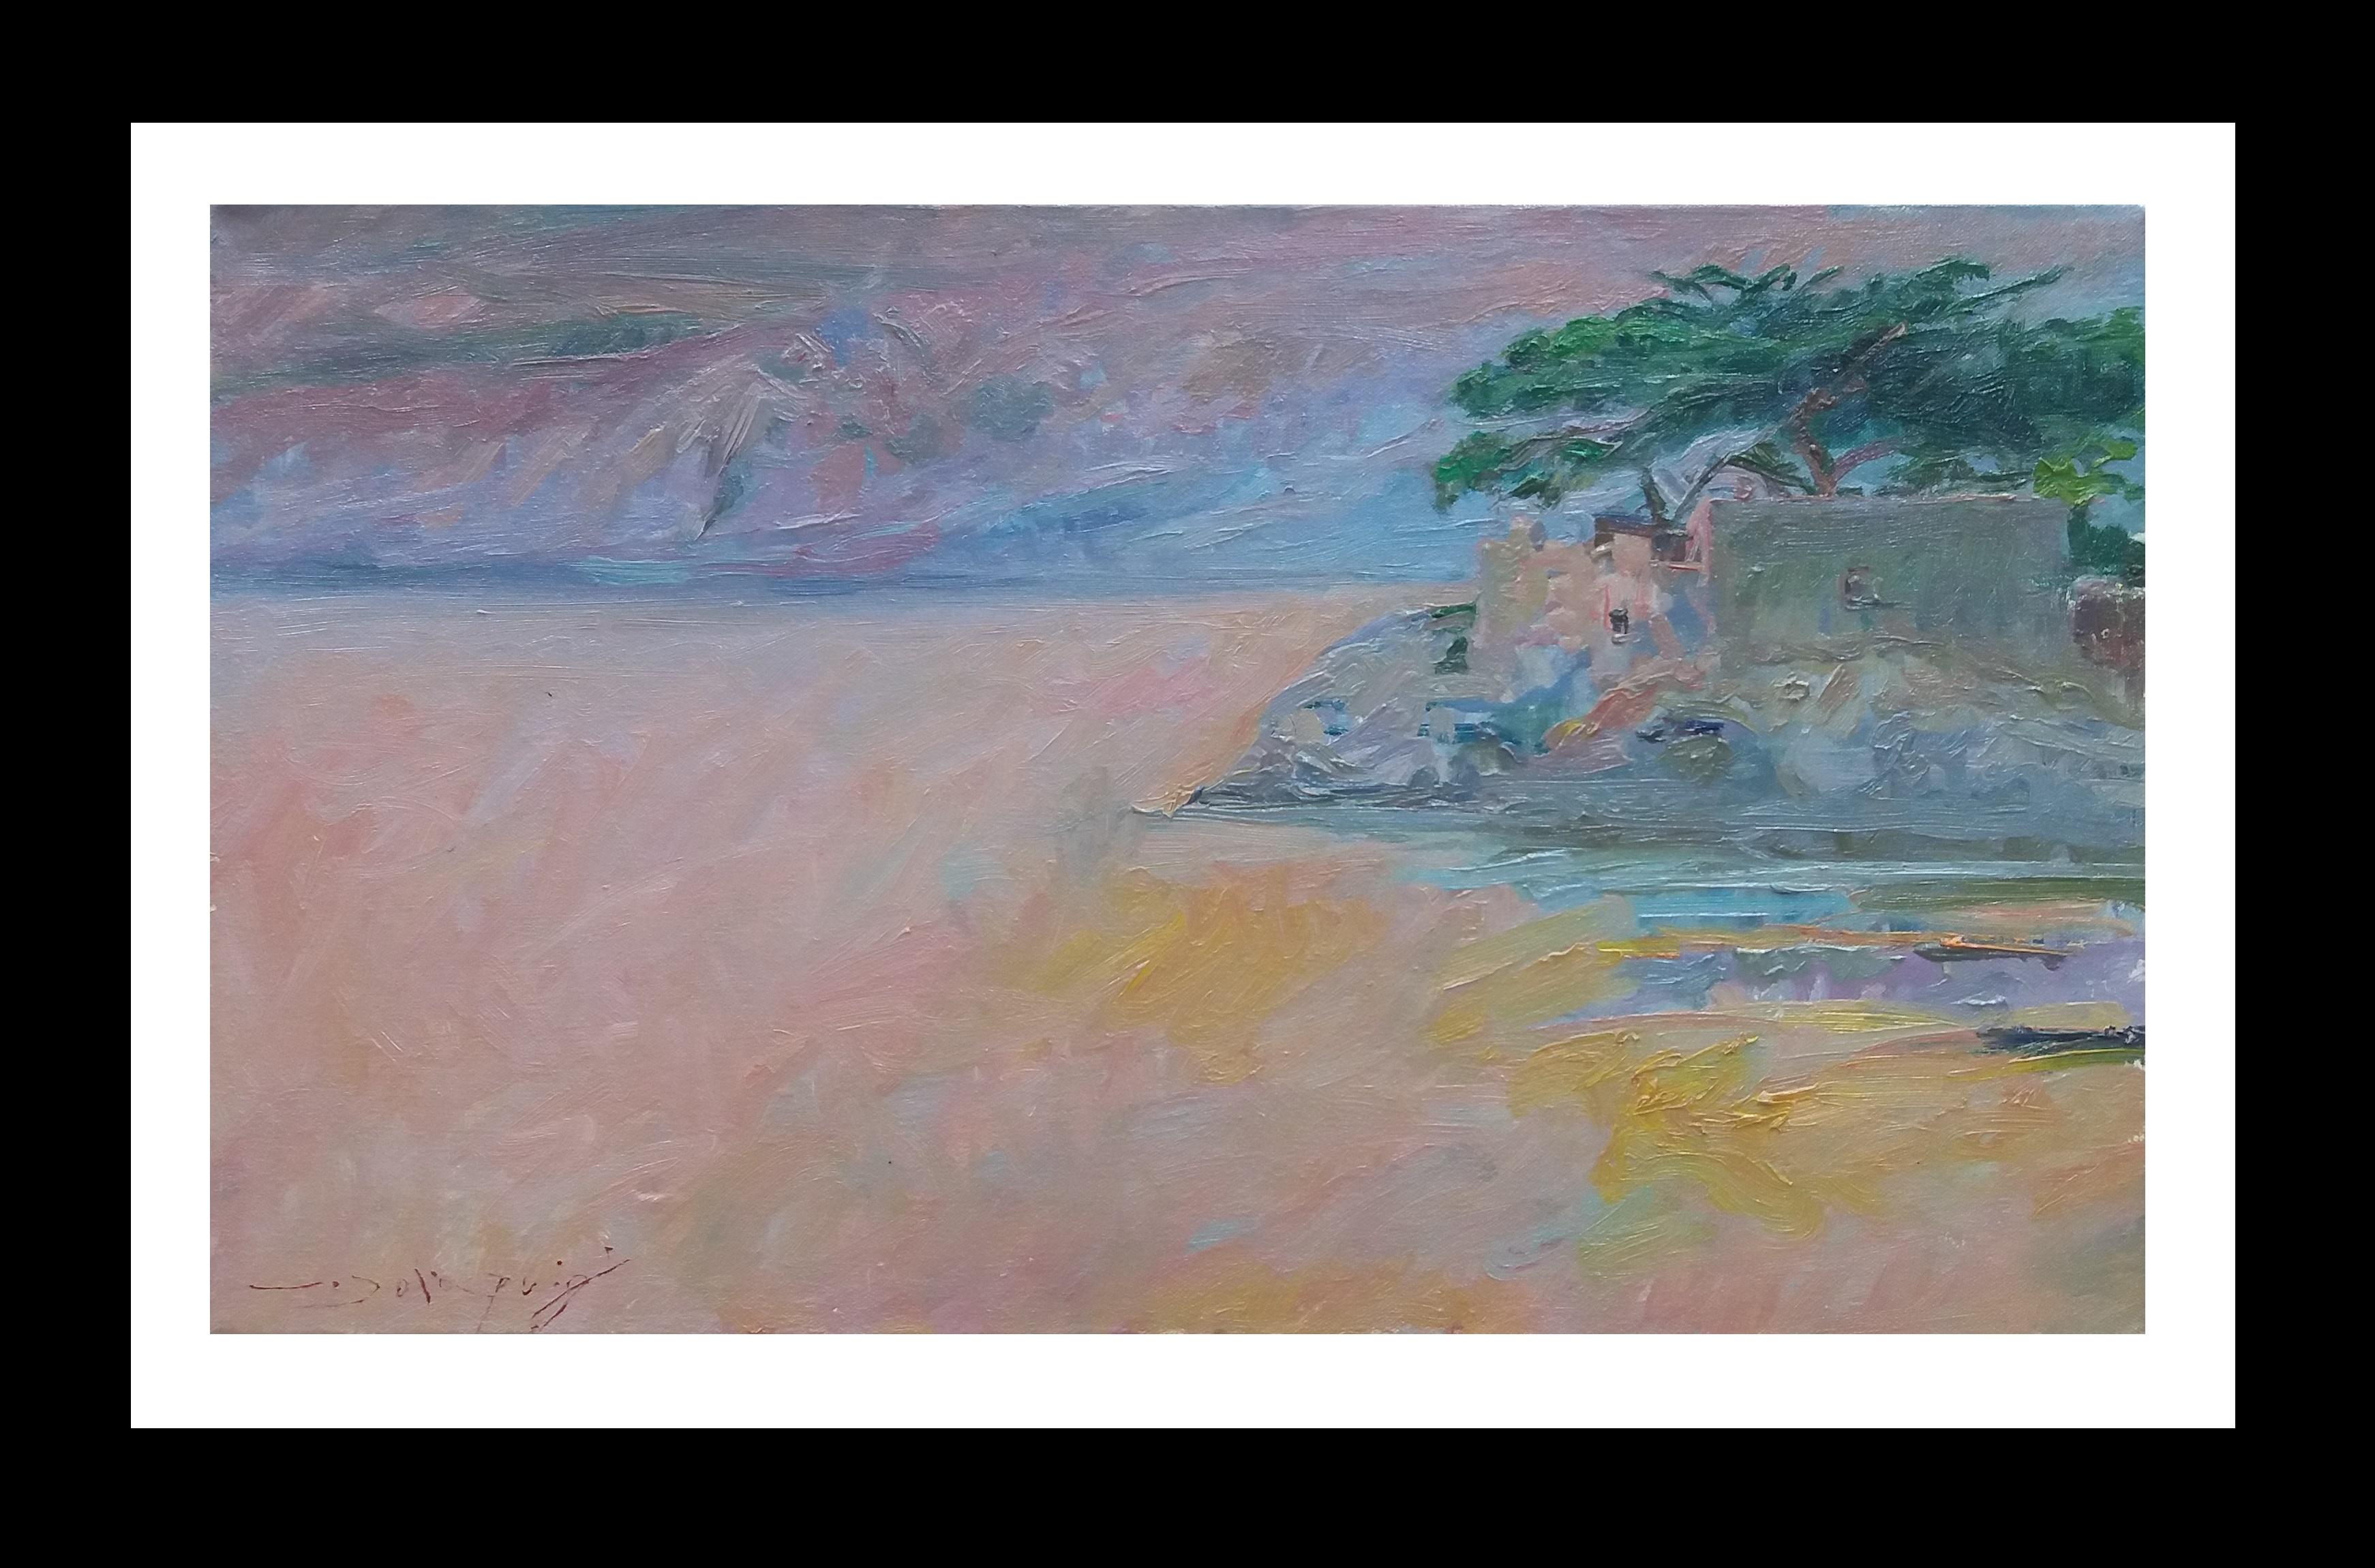 Sola  Puig  Beach Coast.  Sunset original impressionist acrylic painting